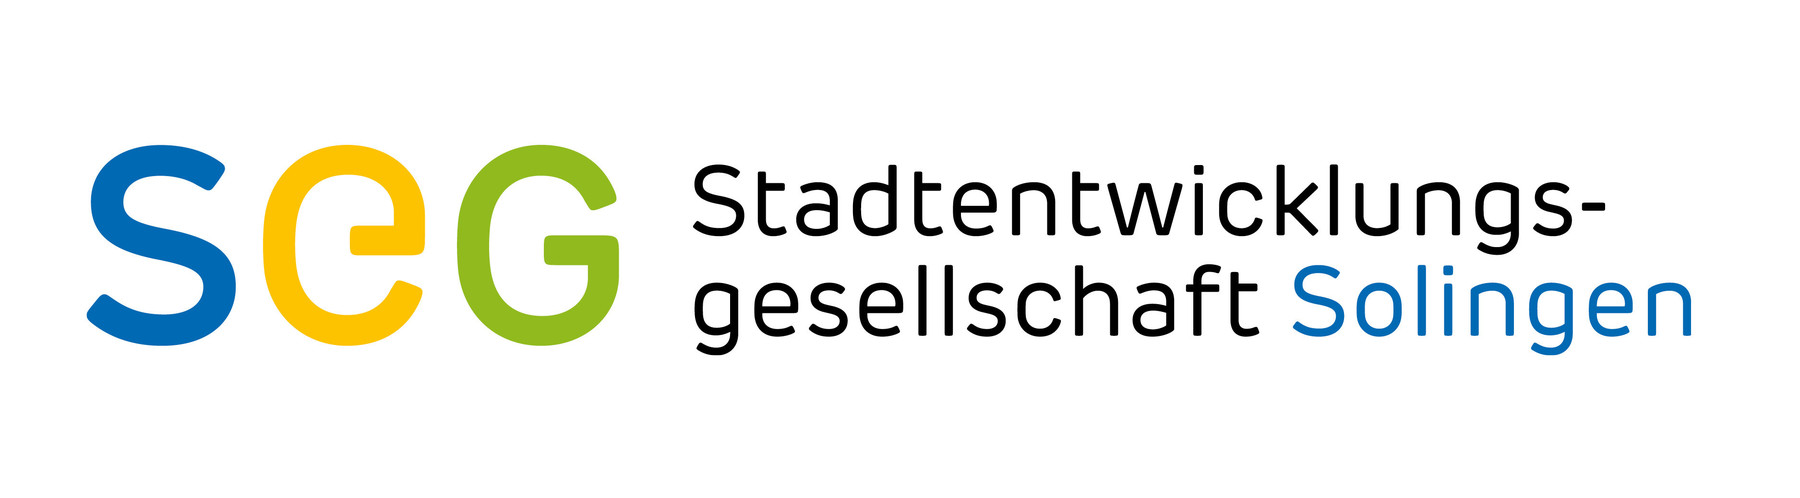 SEG Stadtentwicklungsgesellschaft Solingen Design Federmann und Kampczyk